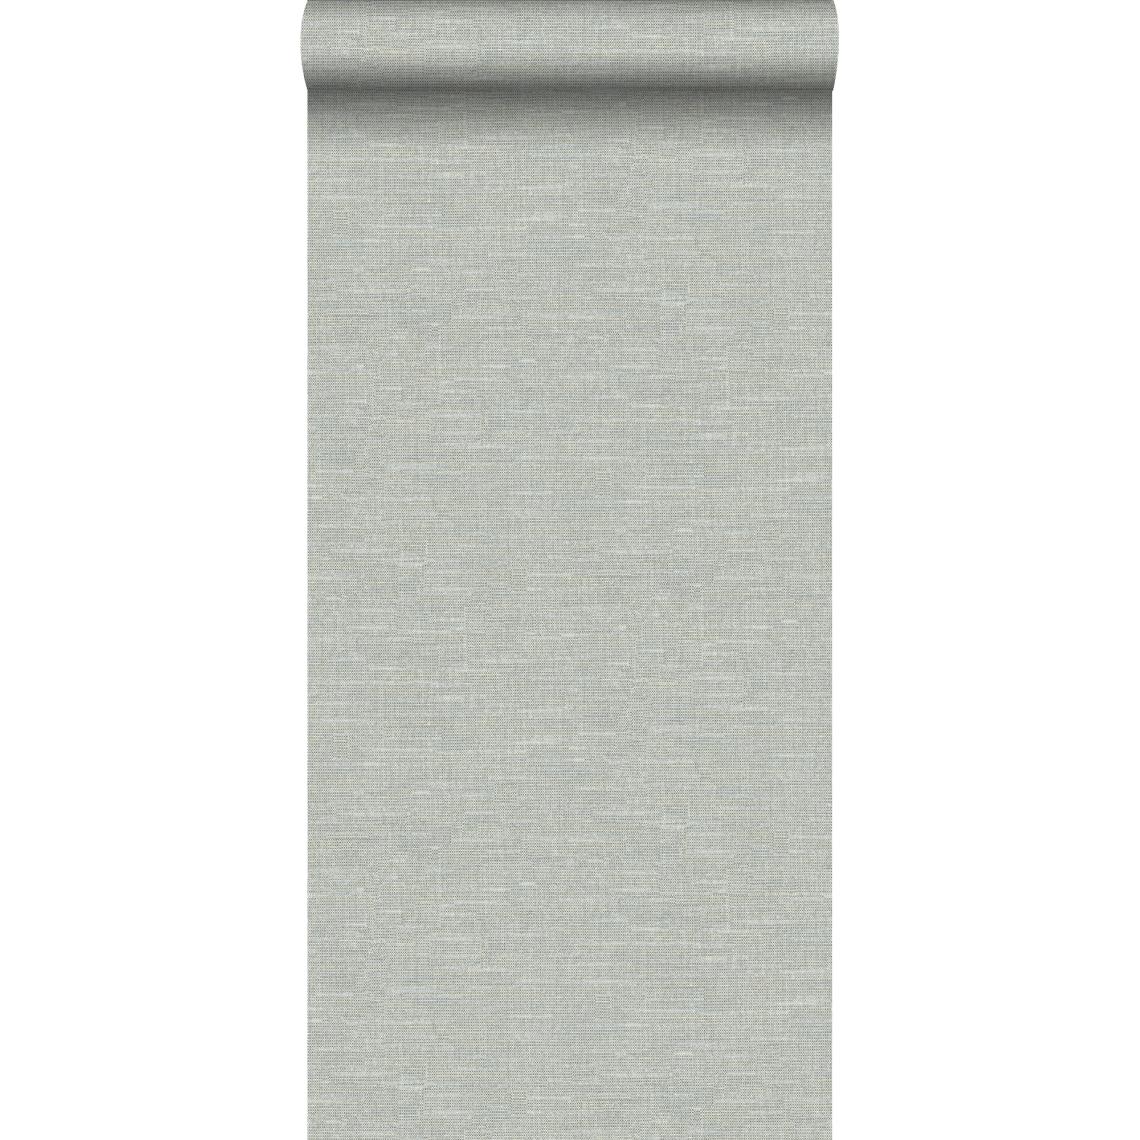 Origin - Origin papier peint lin bleu gris - 347639 - 0.53 x 10.05 m - Papier peint